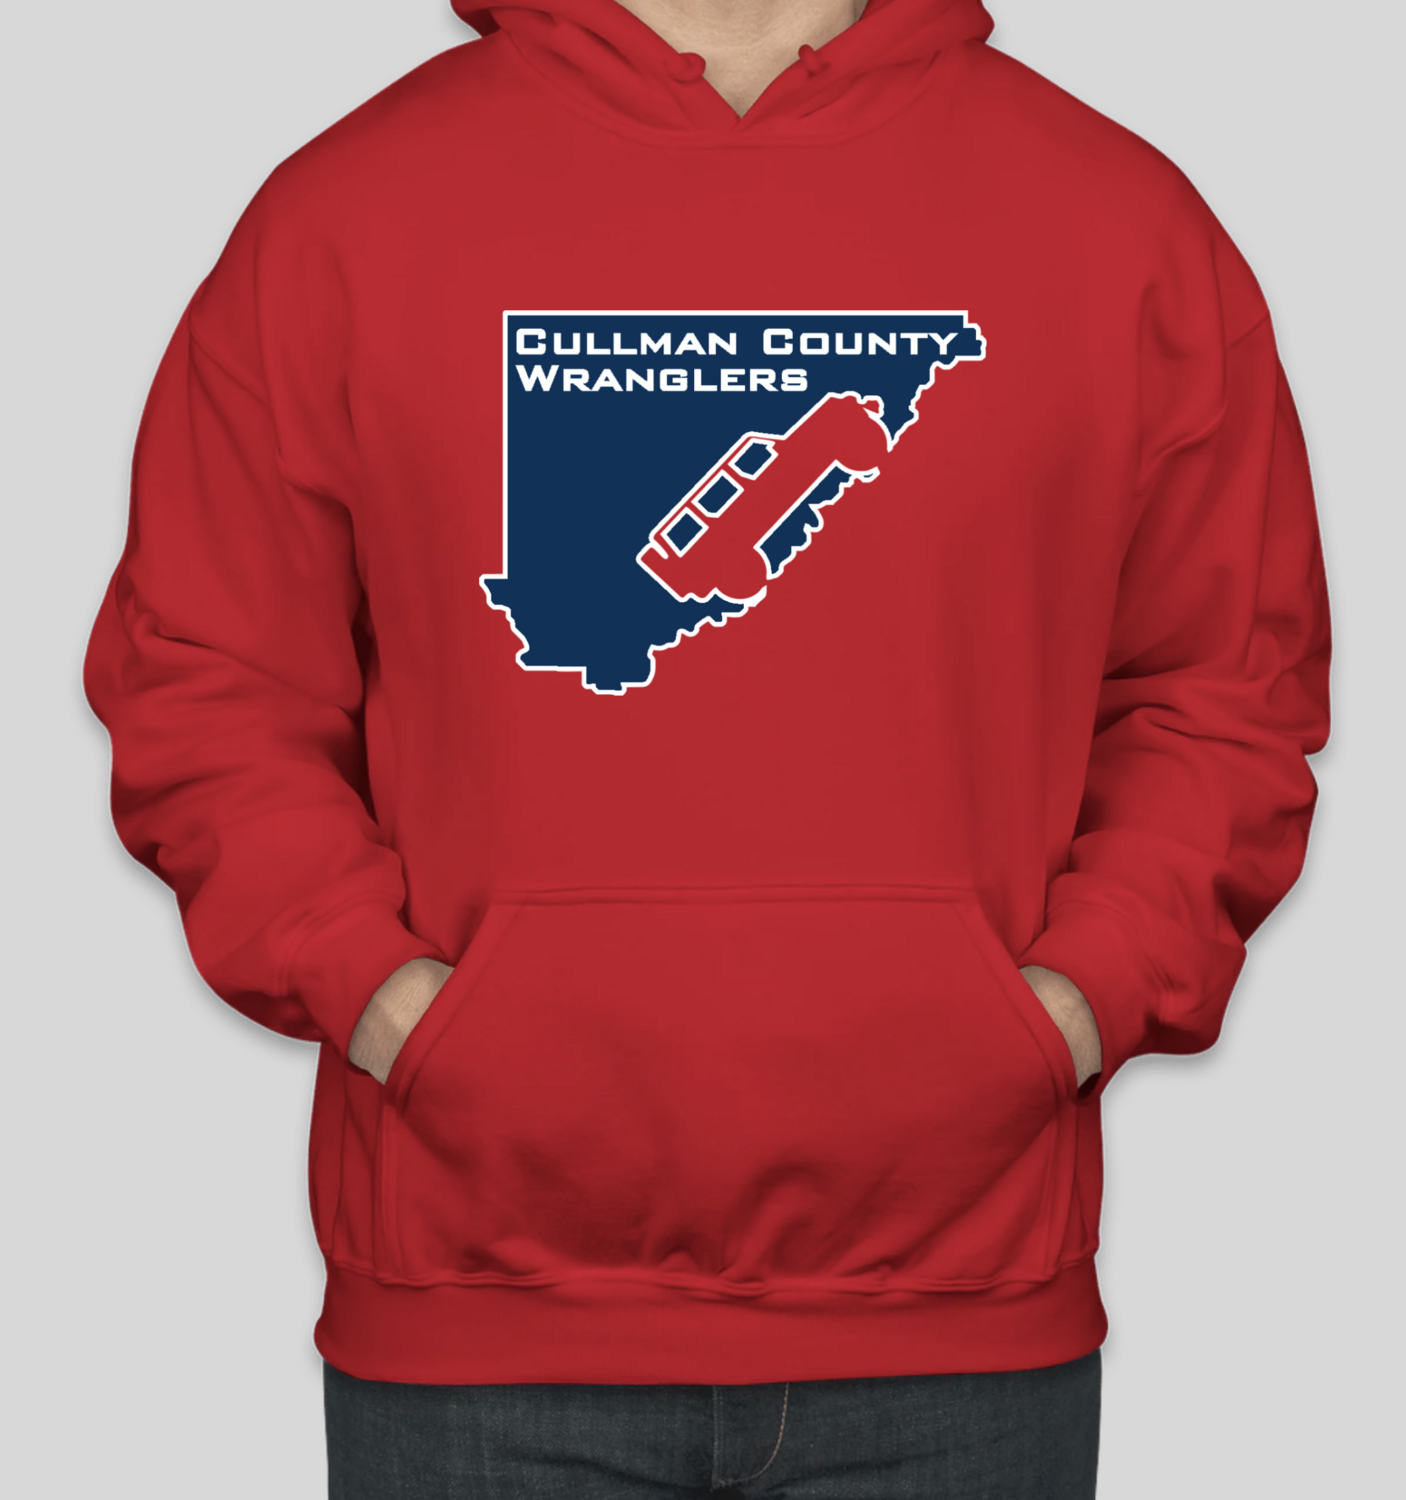 Cullman County Wranglers Hooded Sweatshirt - Red